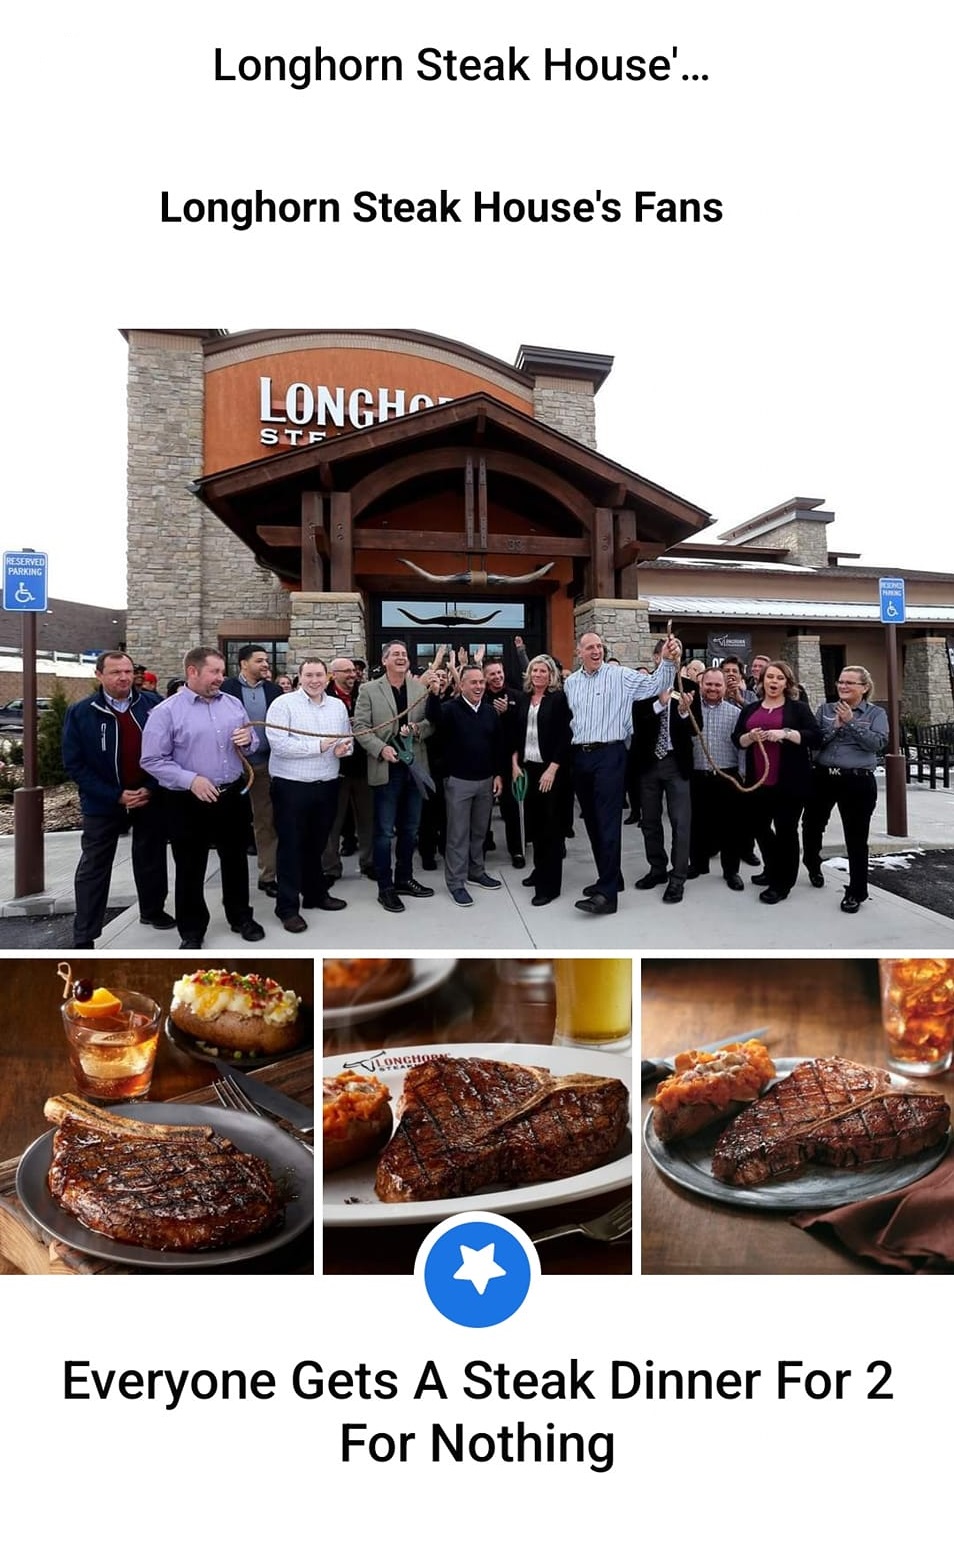 Longhorn Steakhouse Scam on Facebook - Free Steak Dinner